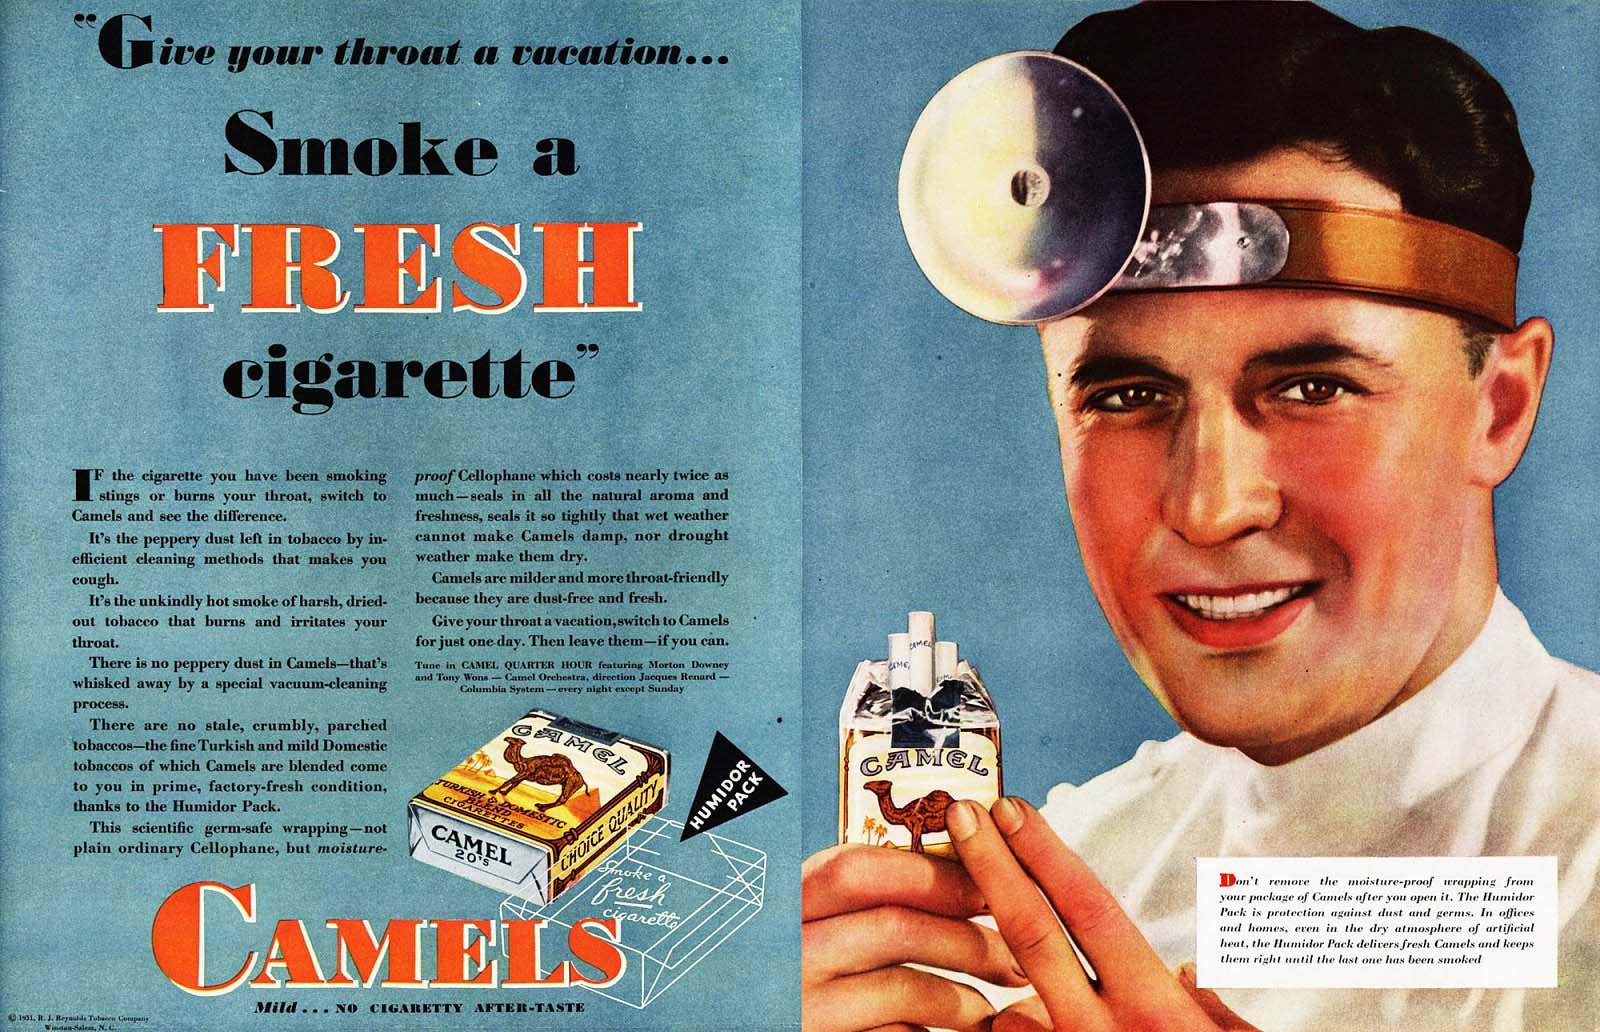 “Smoke a fresh cigarette”. R.J. Reynolds, 1931, SRITA.